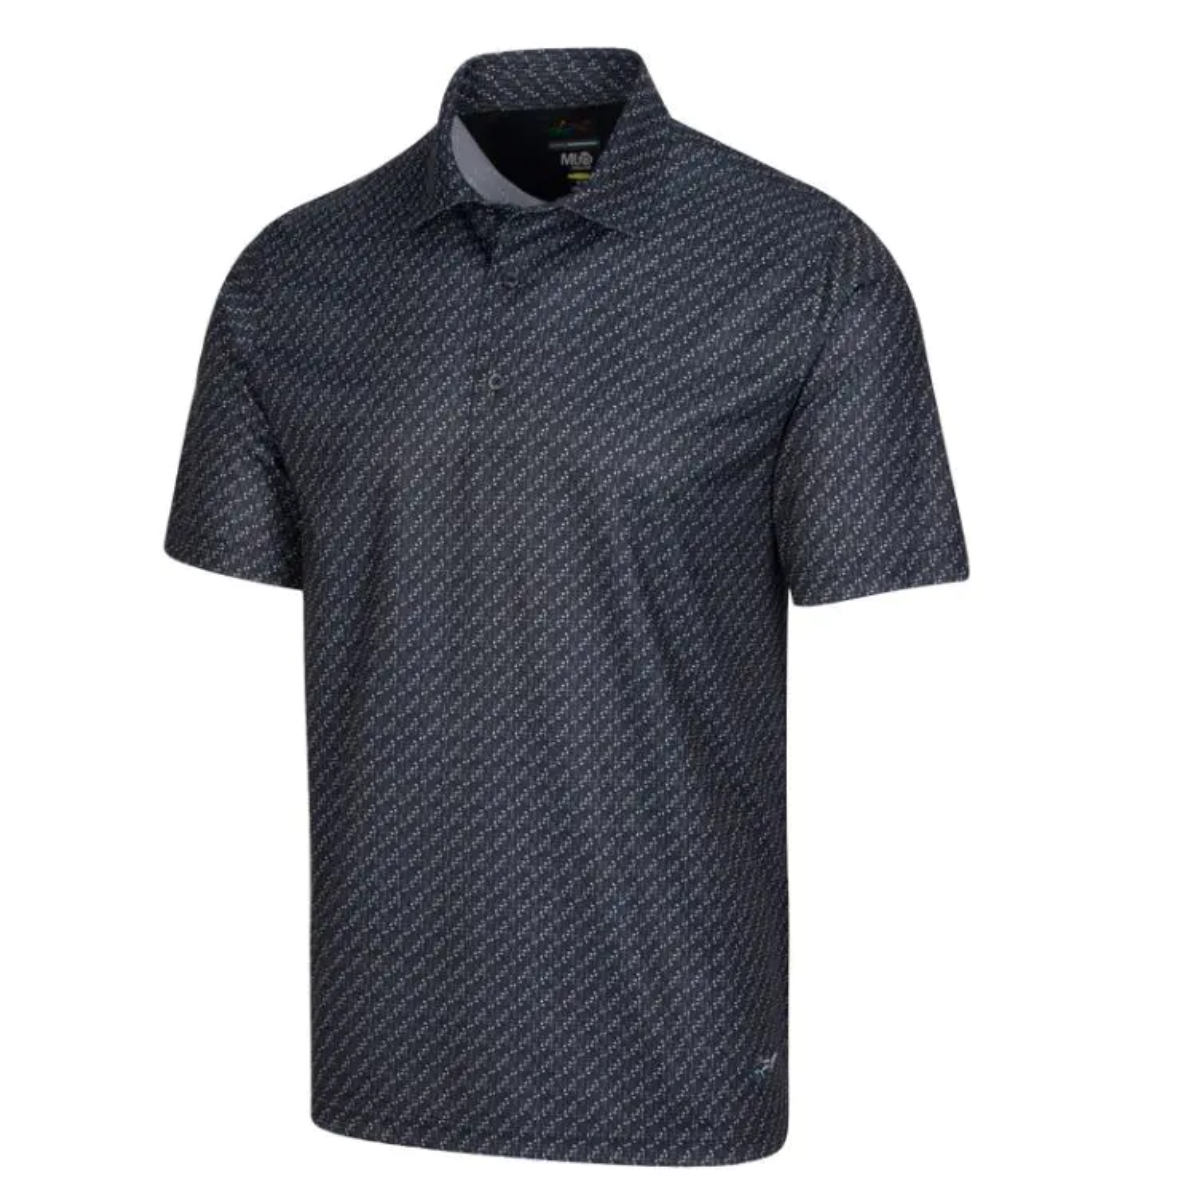 Greg Norman ML75 Men's Iron Print Polo T-Shirt -Black (US Size)